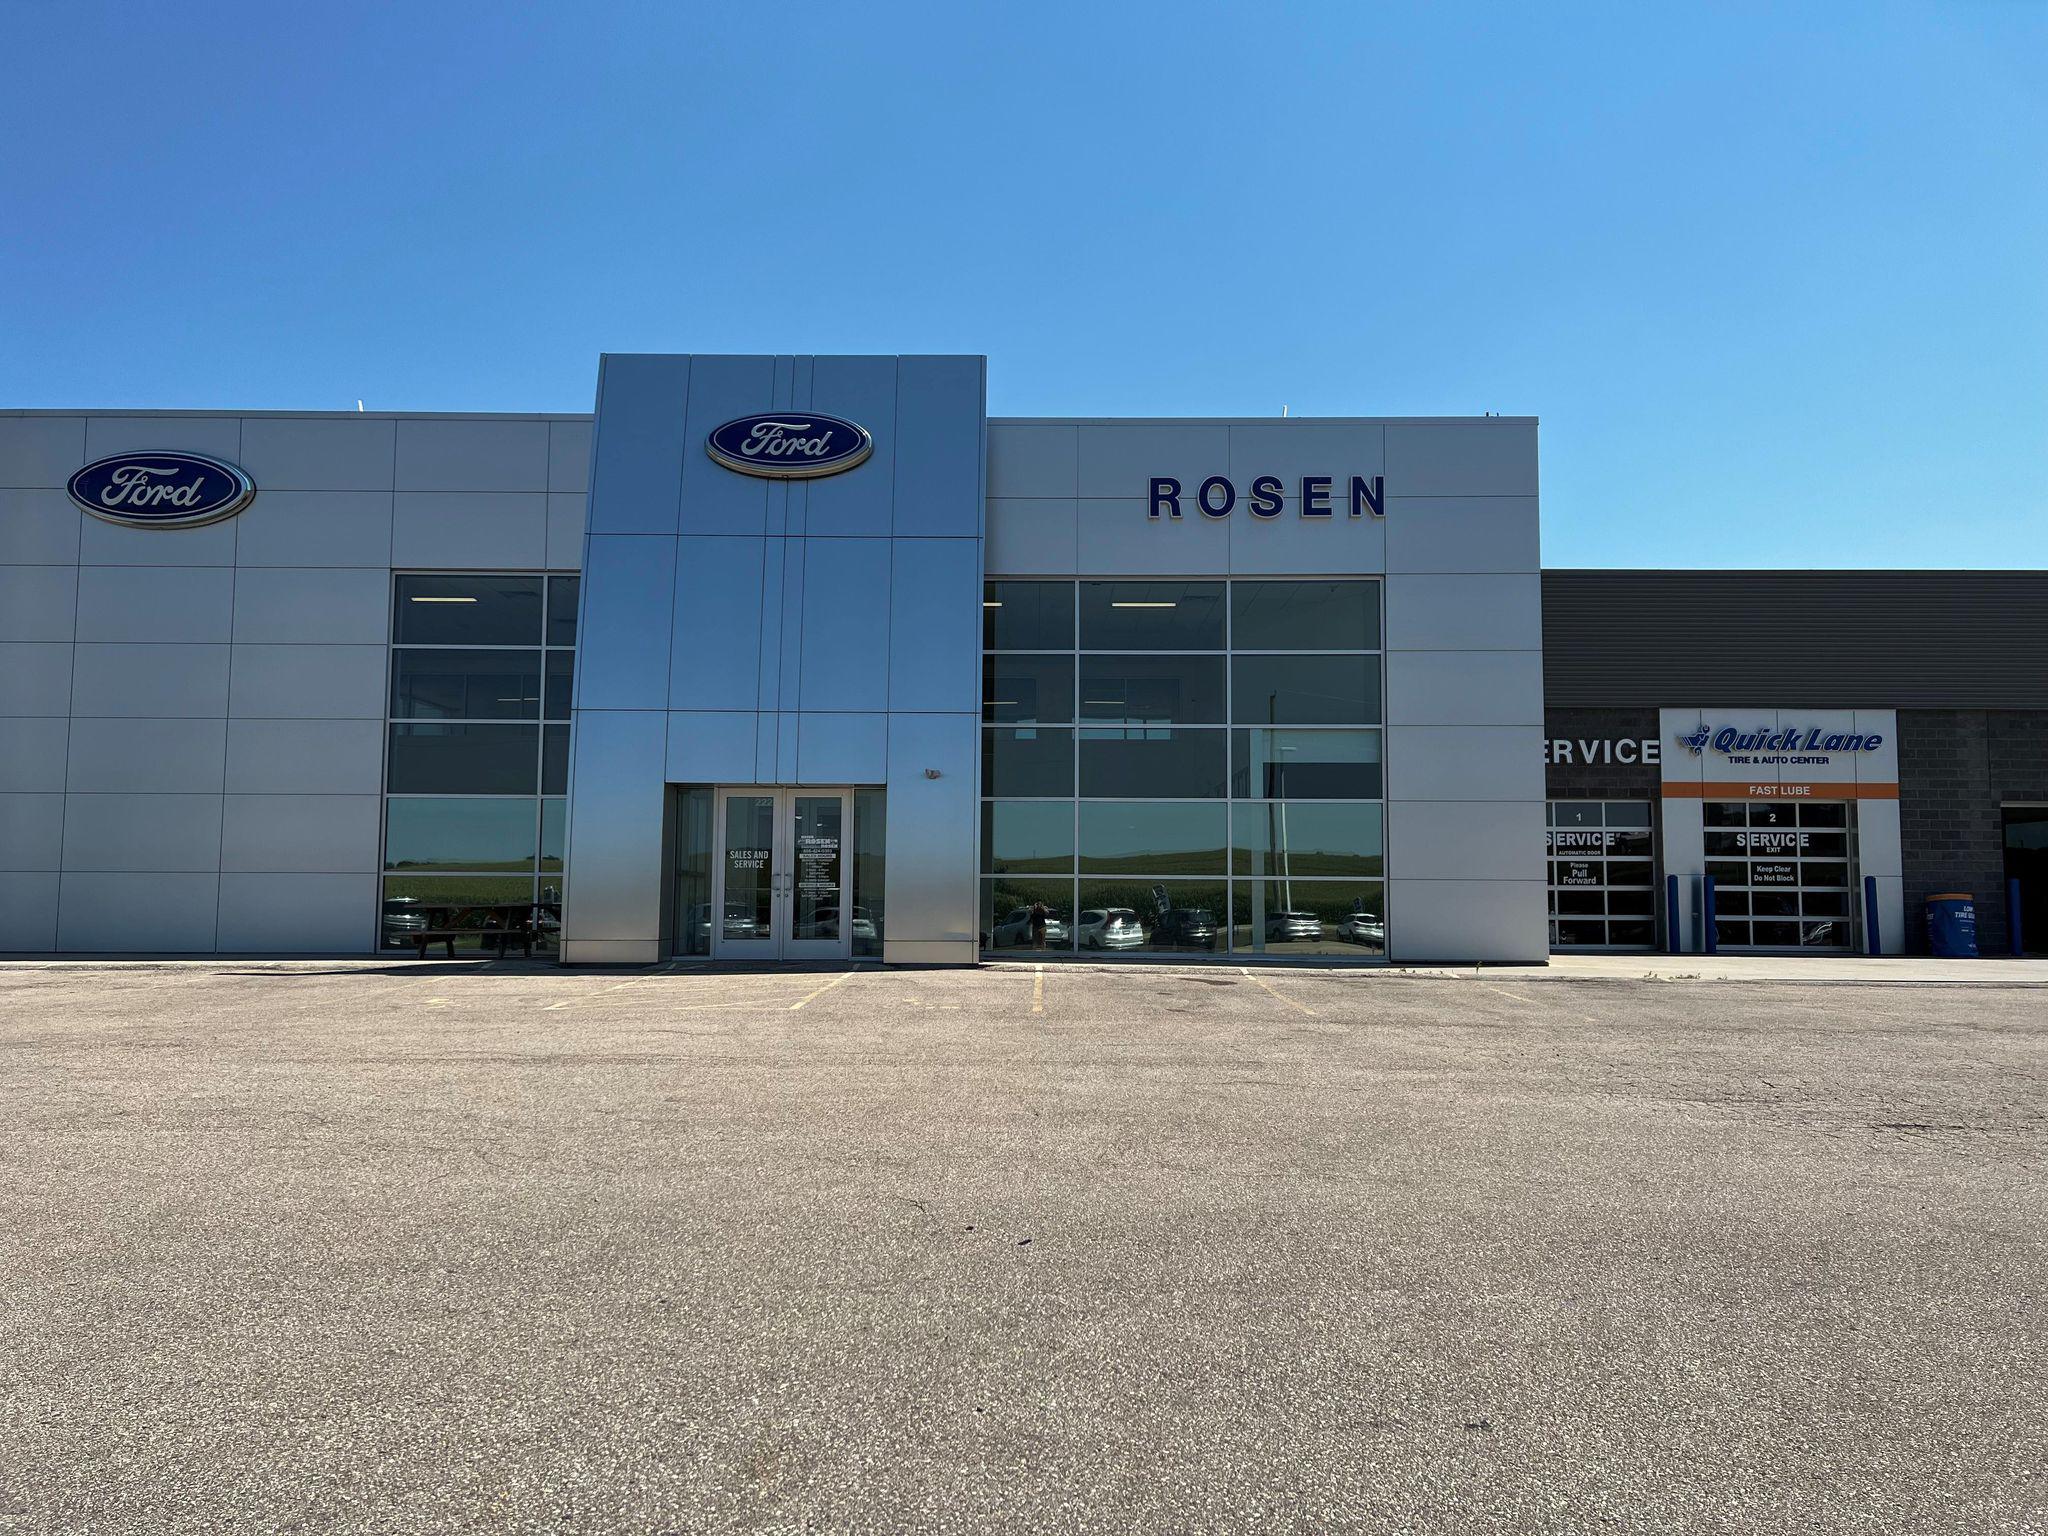 Rosen Ford store front